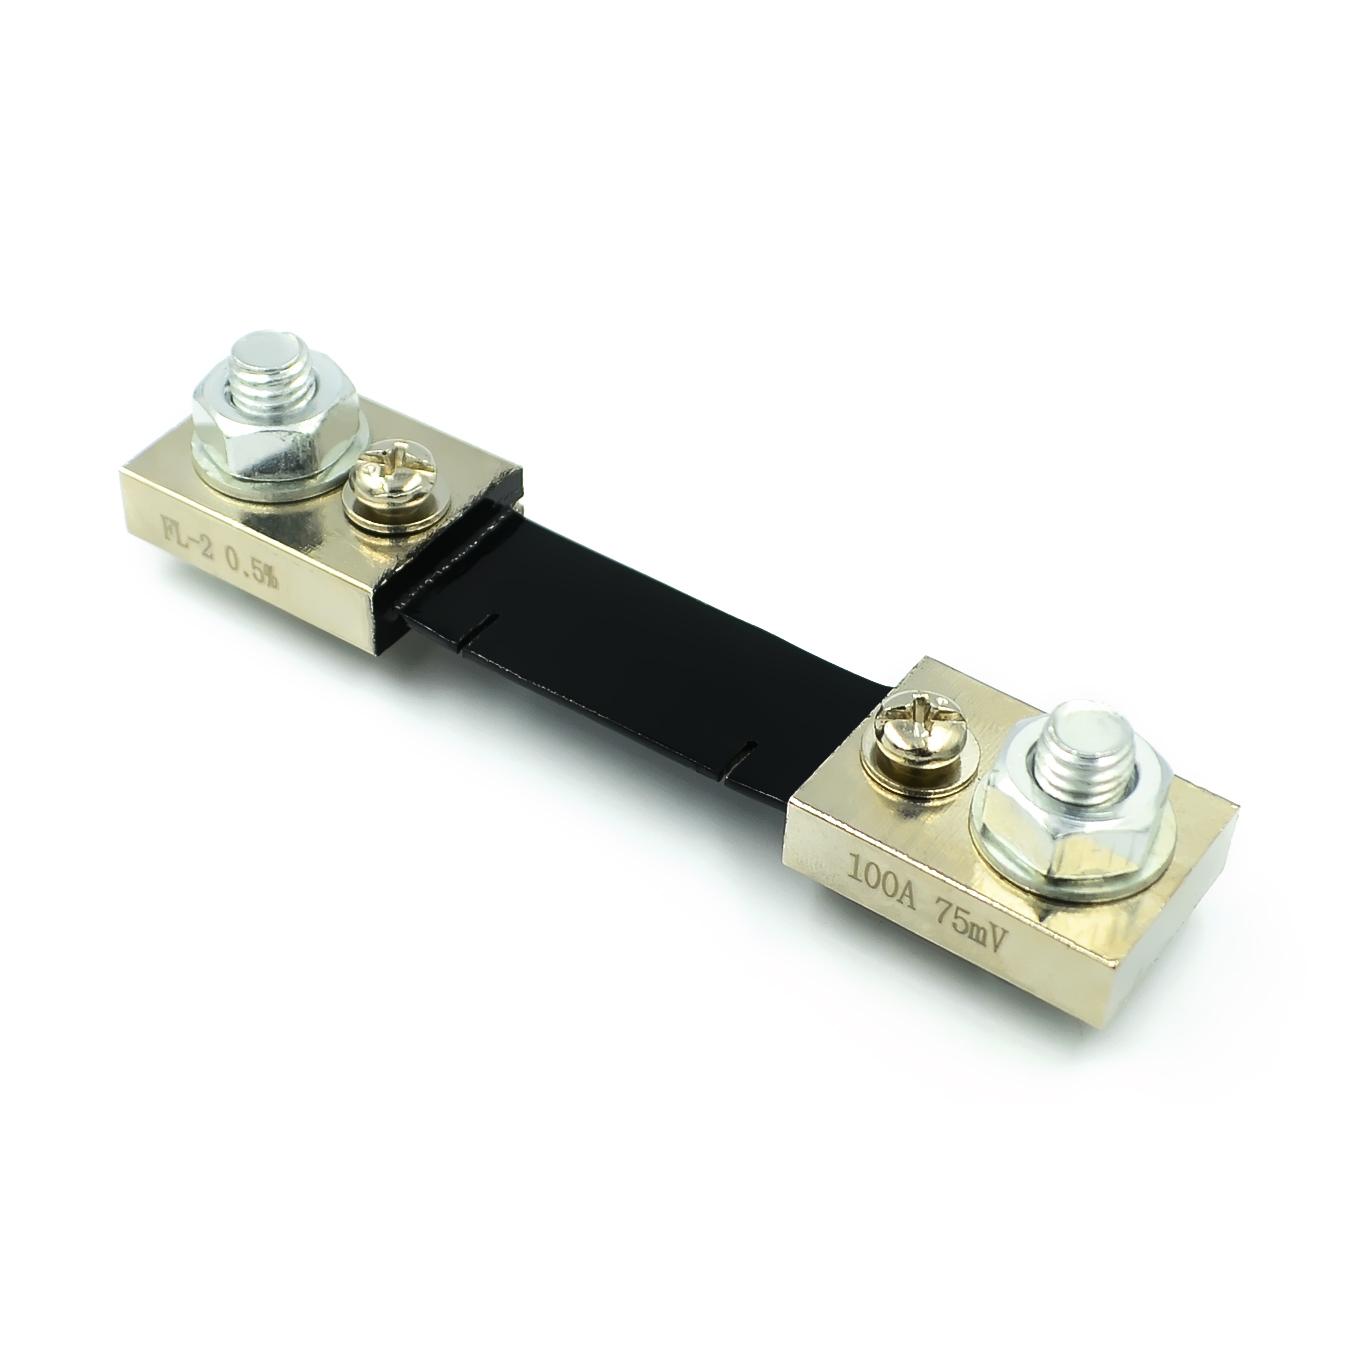 External Shunt FL-2 50A 100A 75mV Current Meter Shunt resistor For digital ammeter amp voltmeter wattmeter